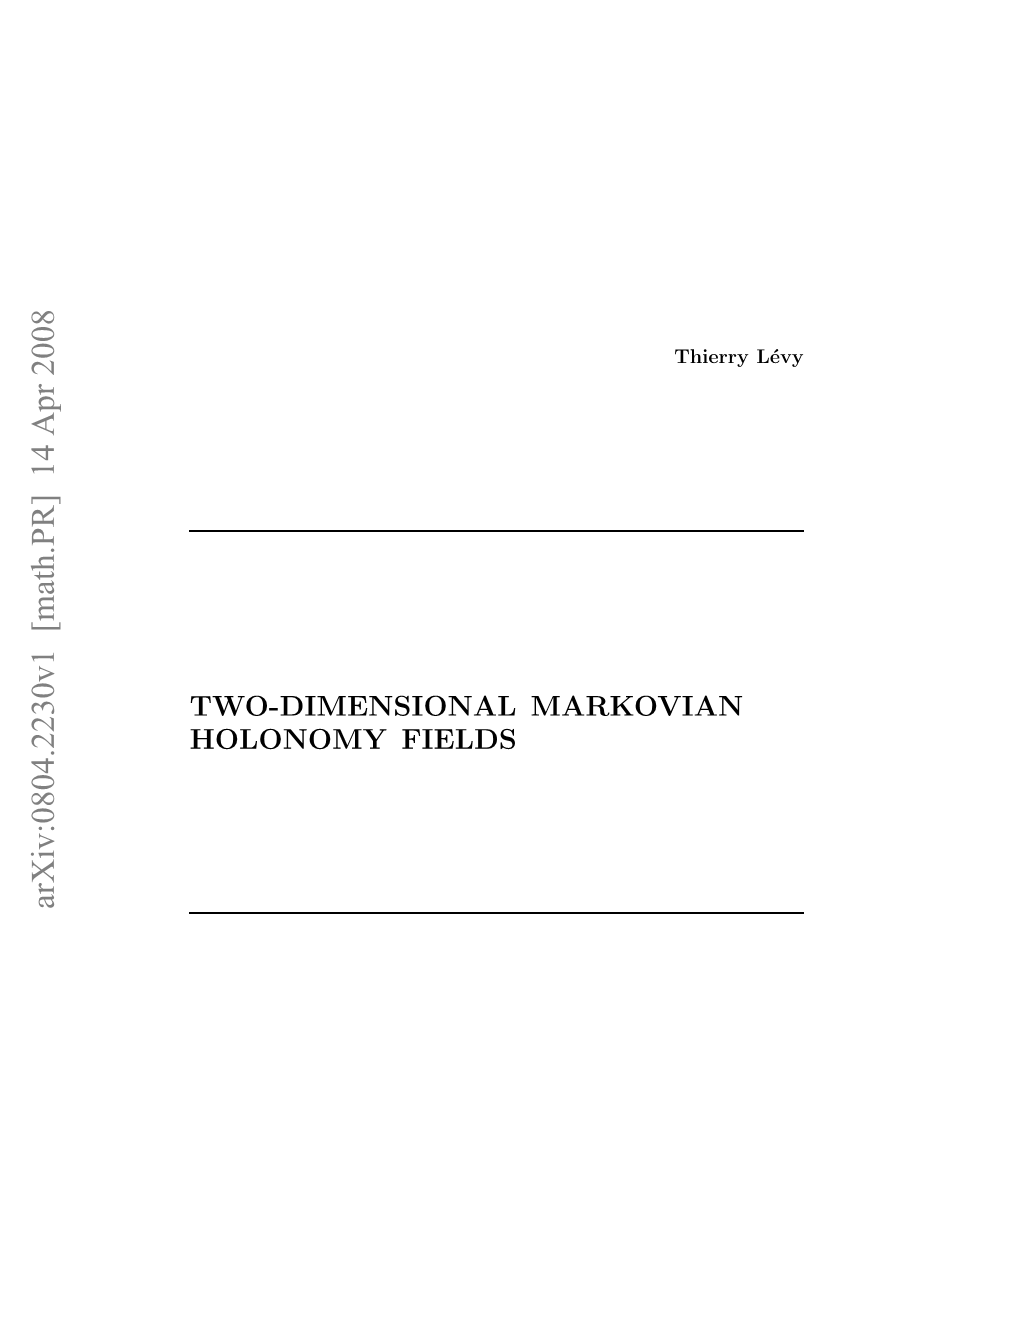 Two-Dimensional Markovian Holonomy Fields